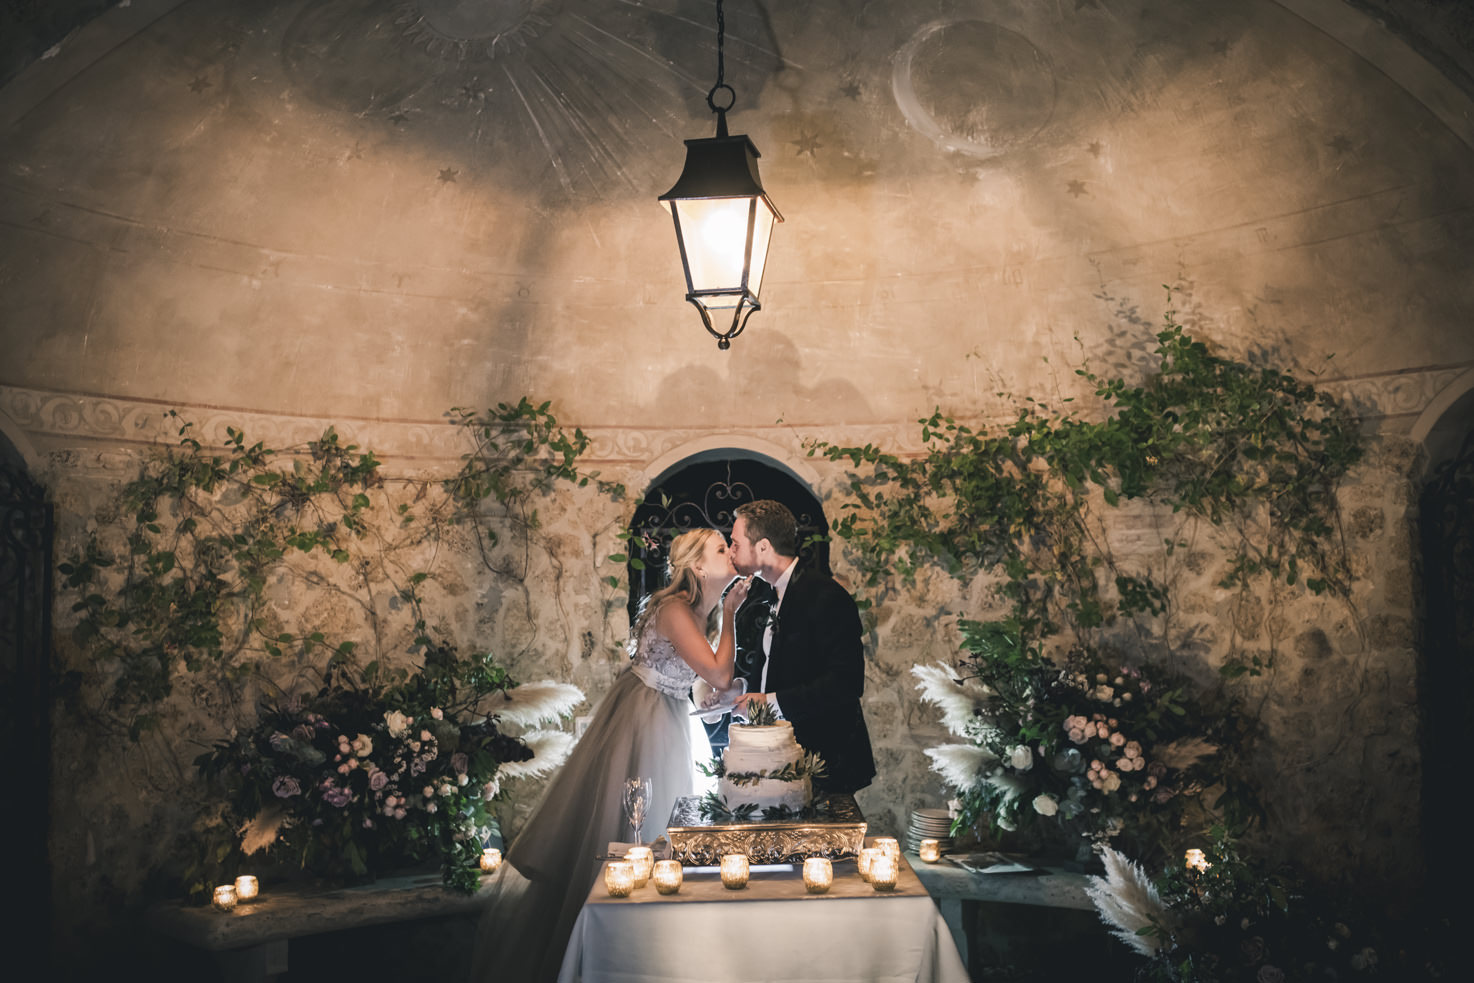 Cake Cutting at Italian wedding